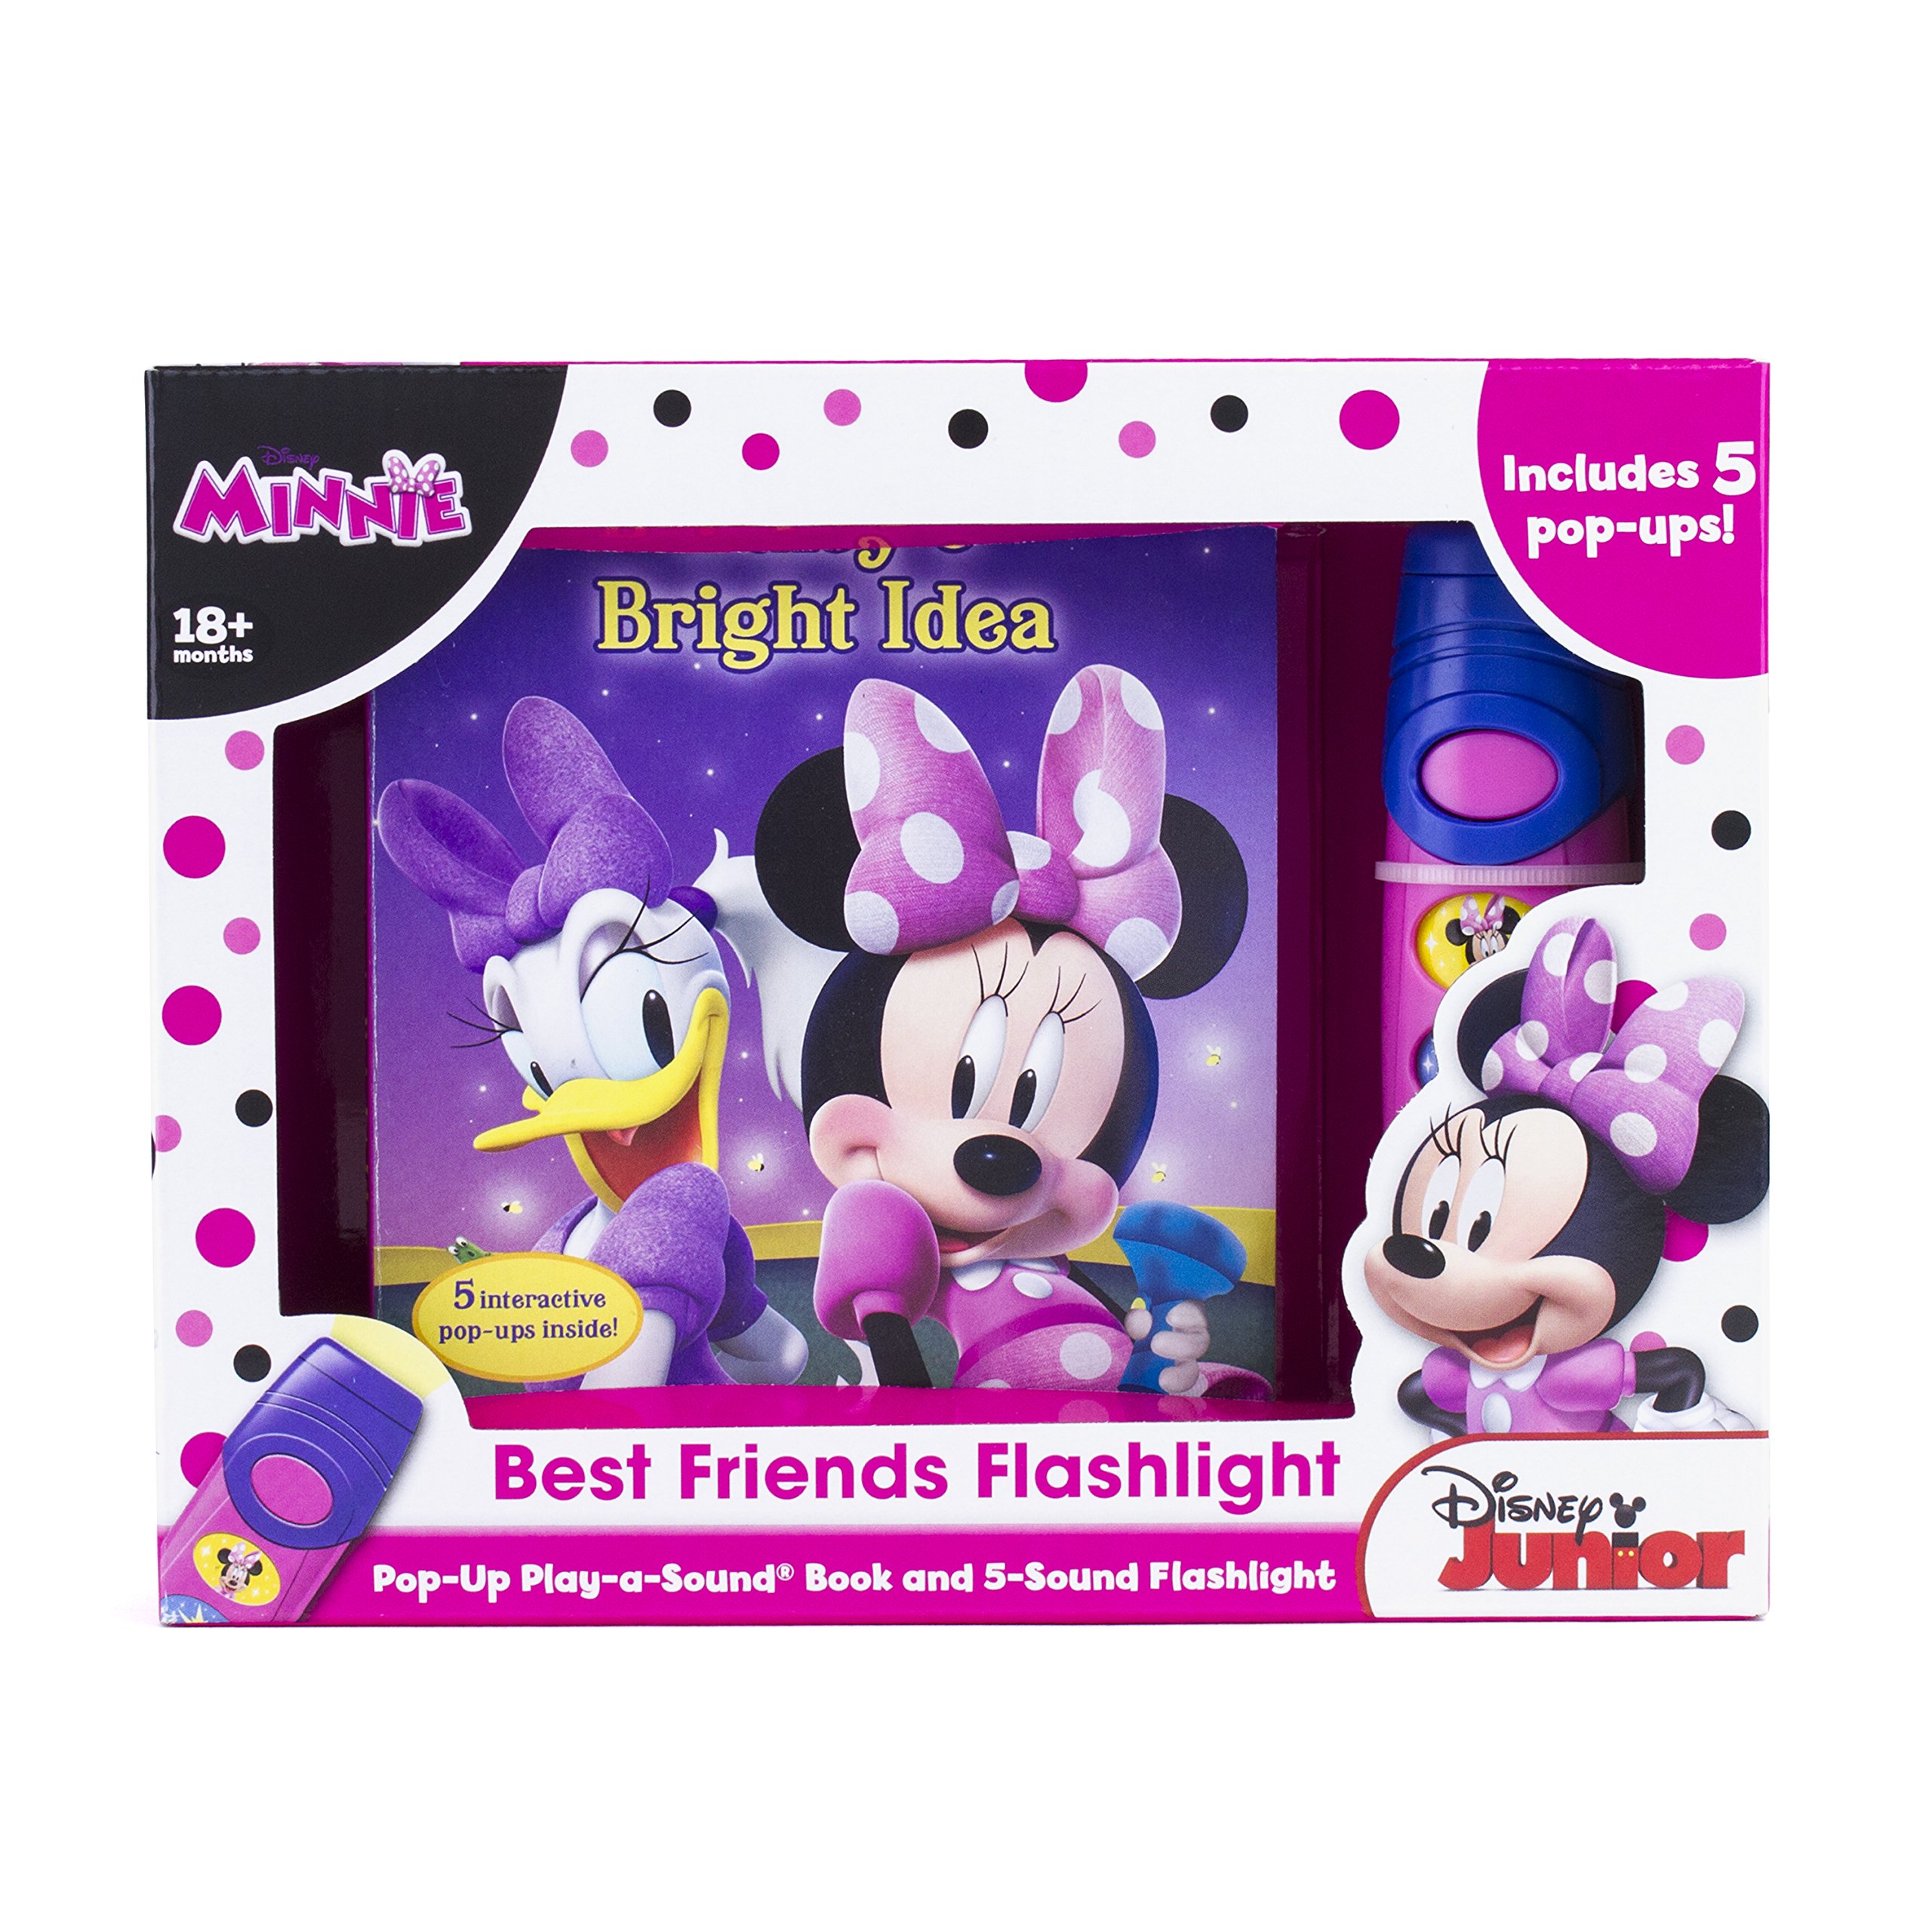 Disney Minnie Mouse - Best Friends Pop-Up Sound Board Book and Sound Flashlight Toy - PI Kids (Play-A-Sound)